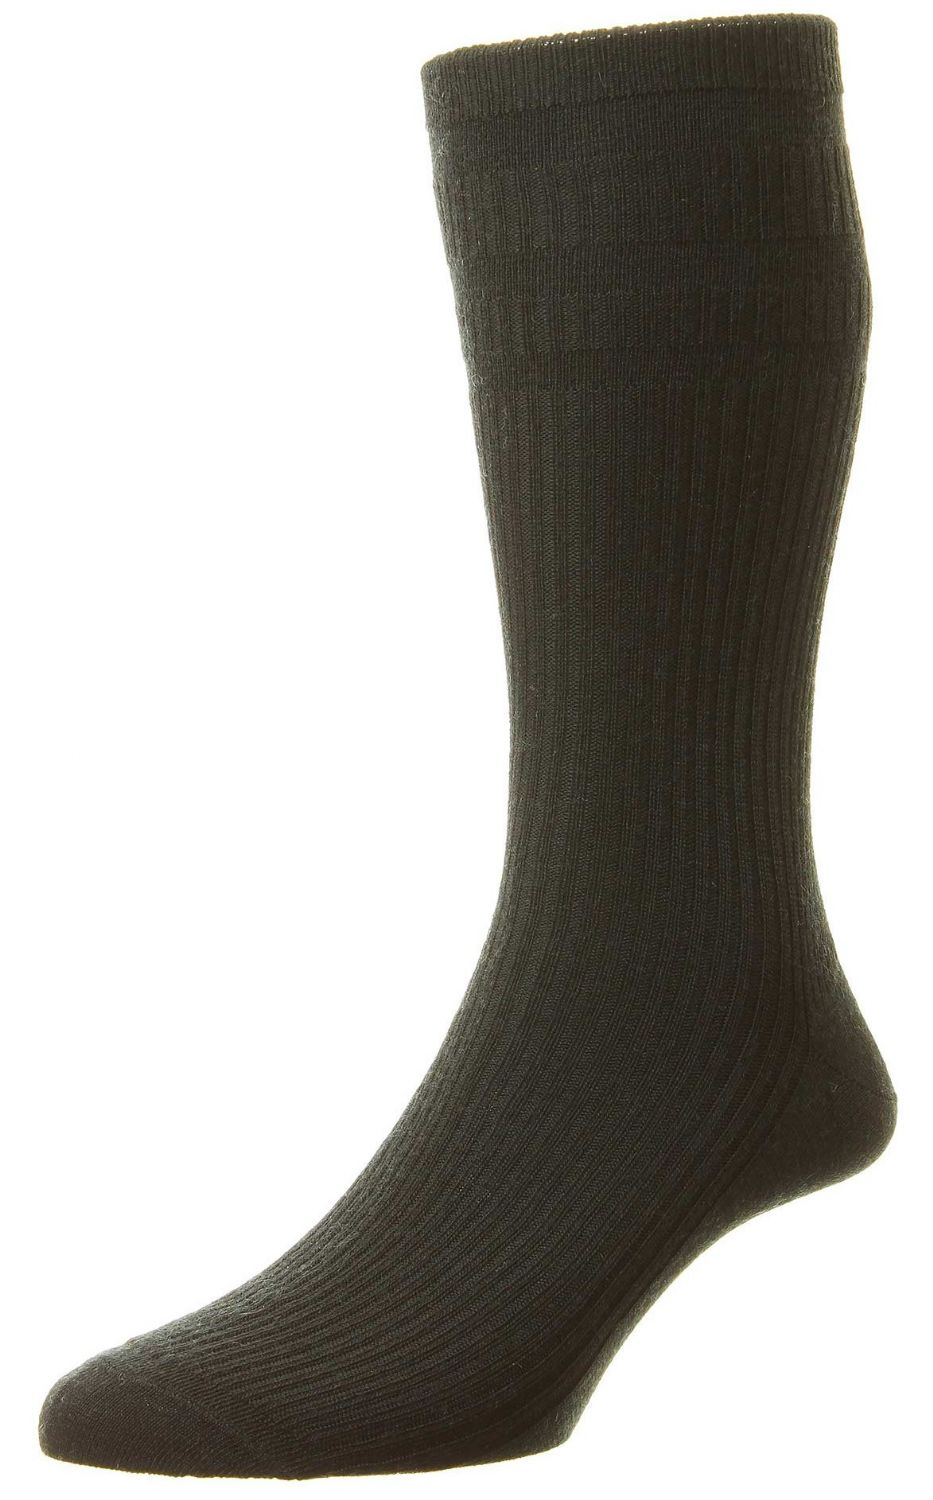 HJ Socks HJ190 Black Shoe size 11-13